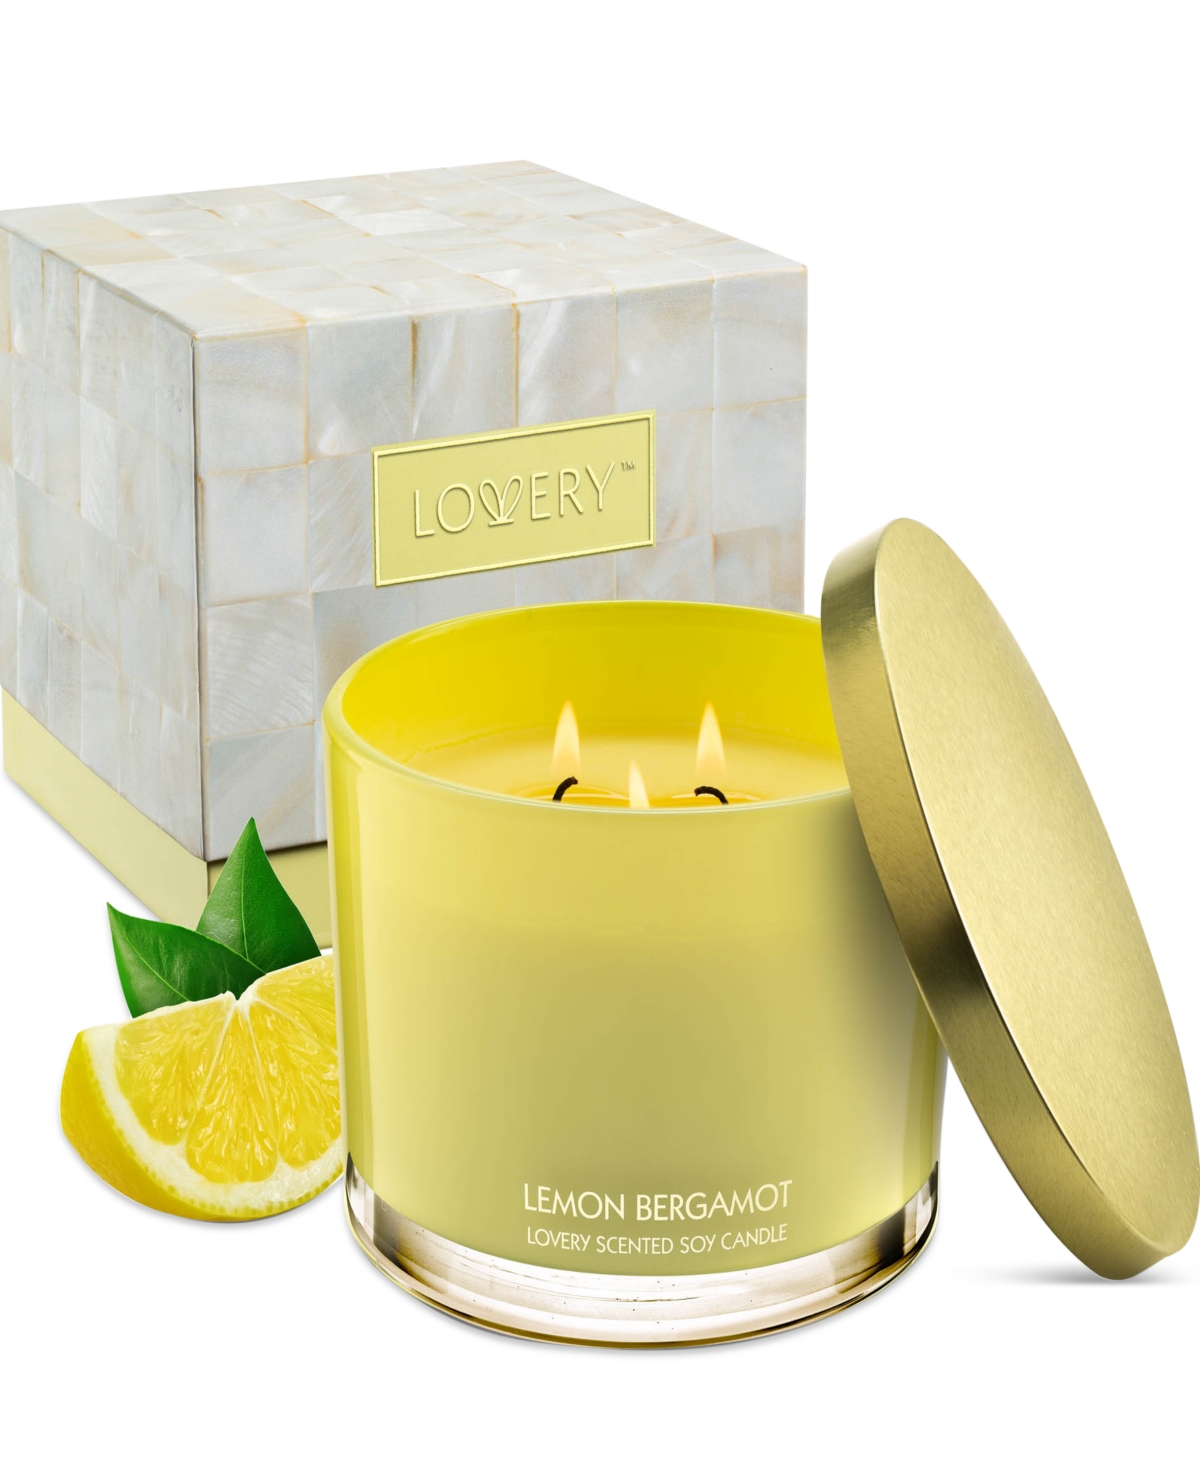 Lemon Bergamot 3-Wick Soy Candle, 13 oz.